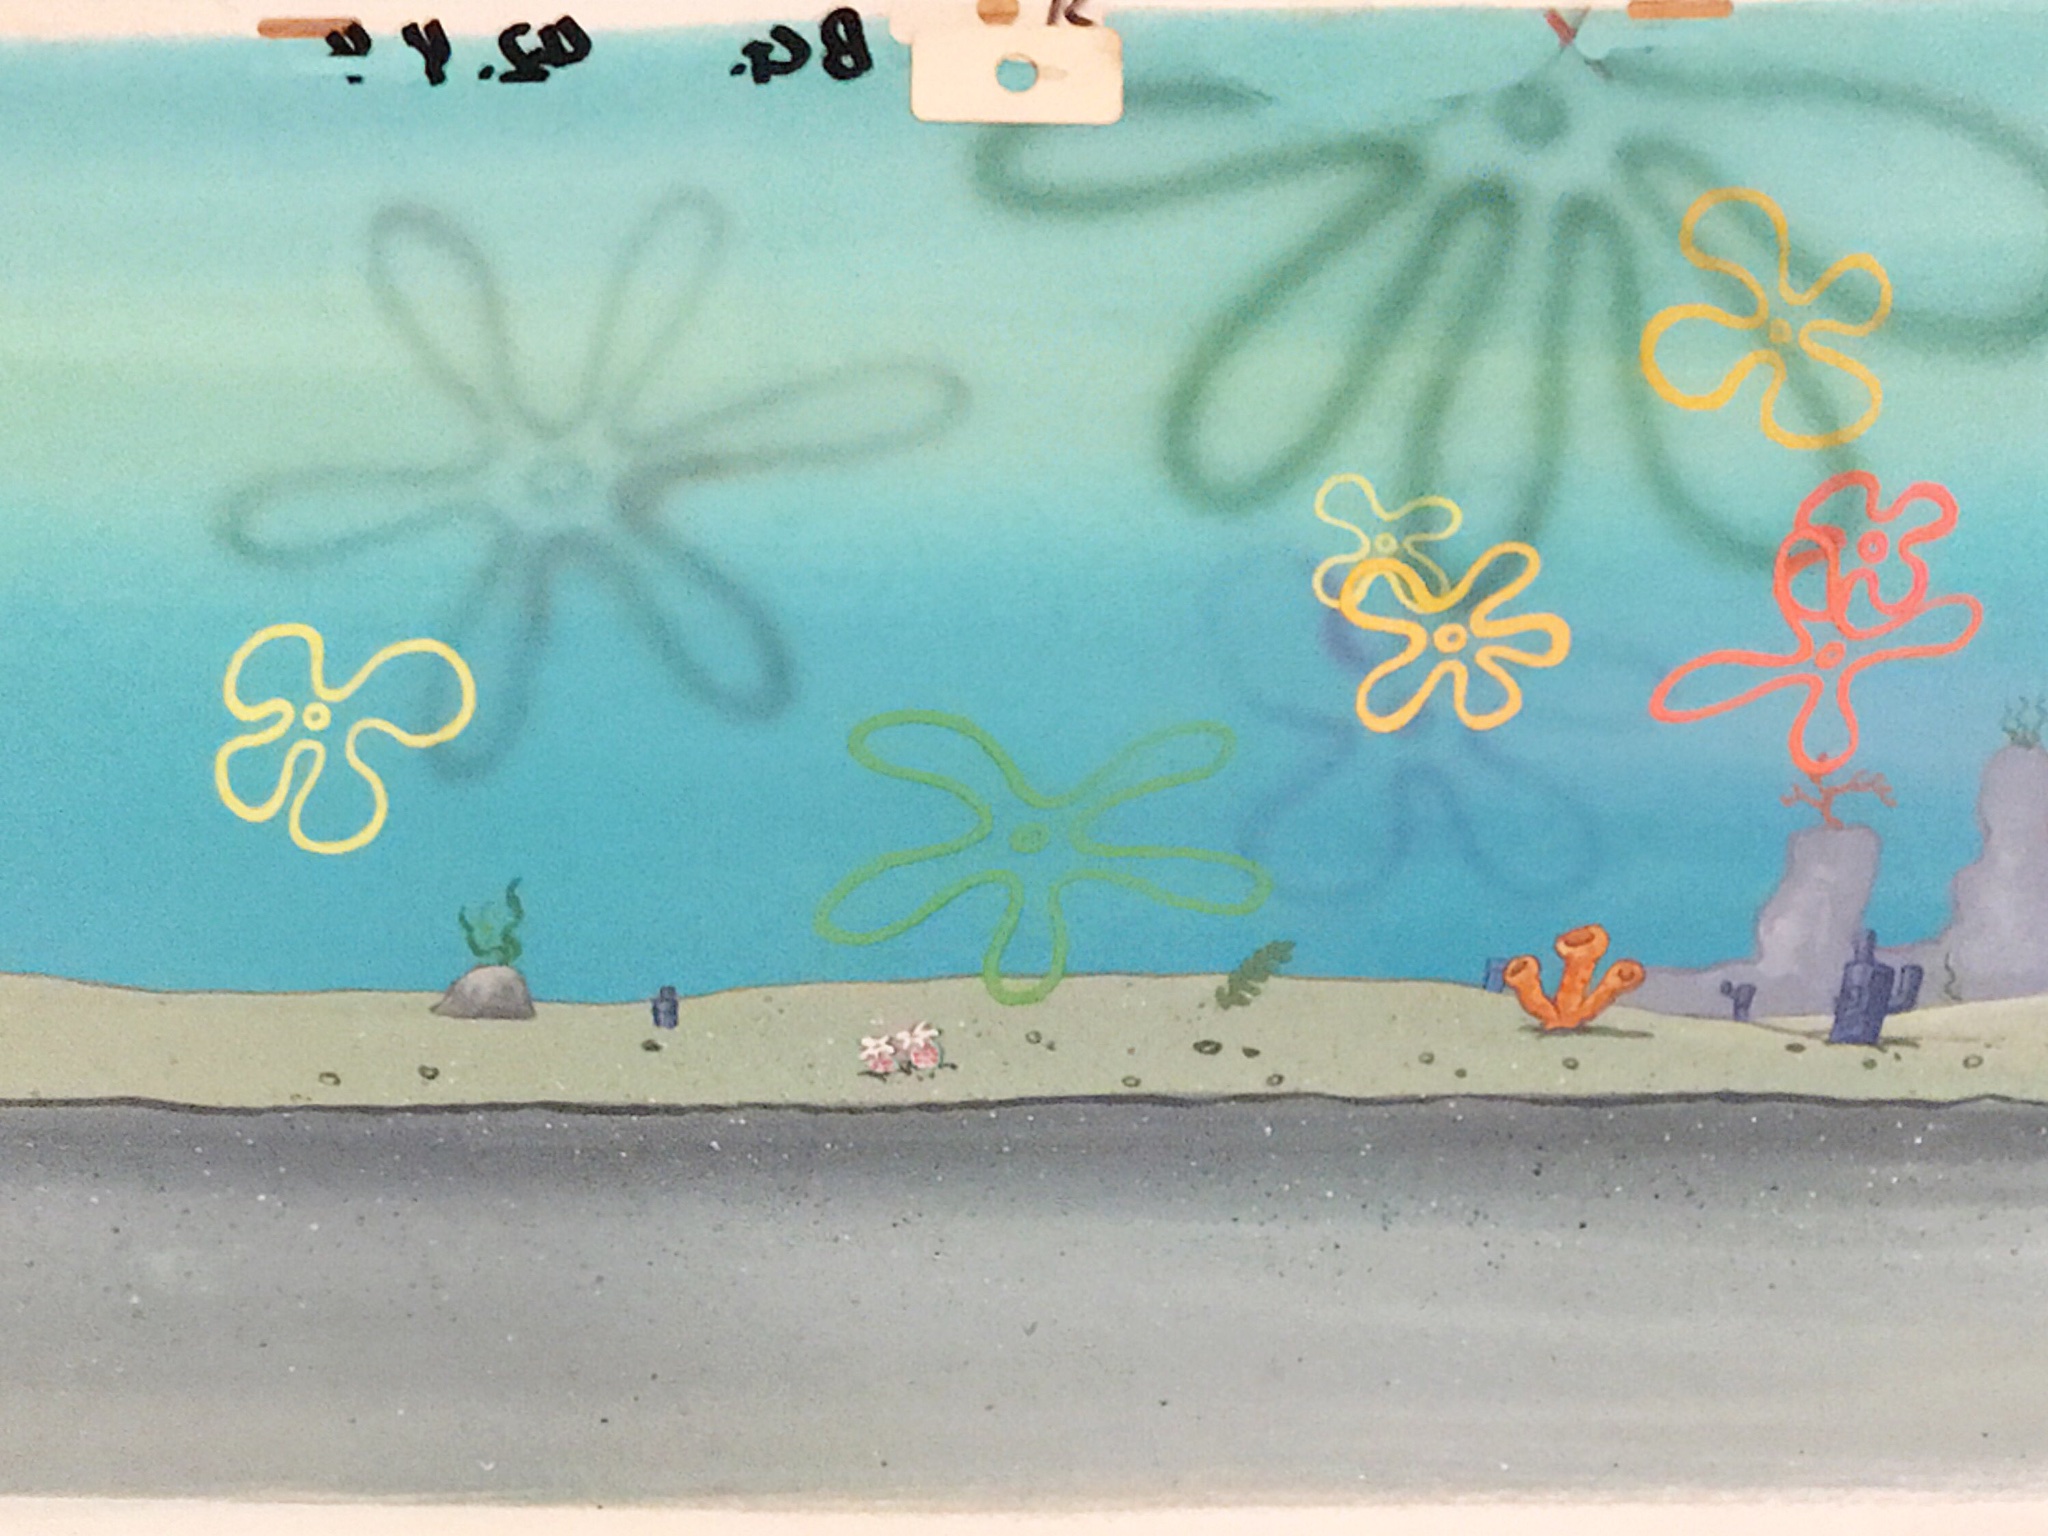 spongebob flowers background